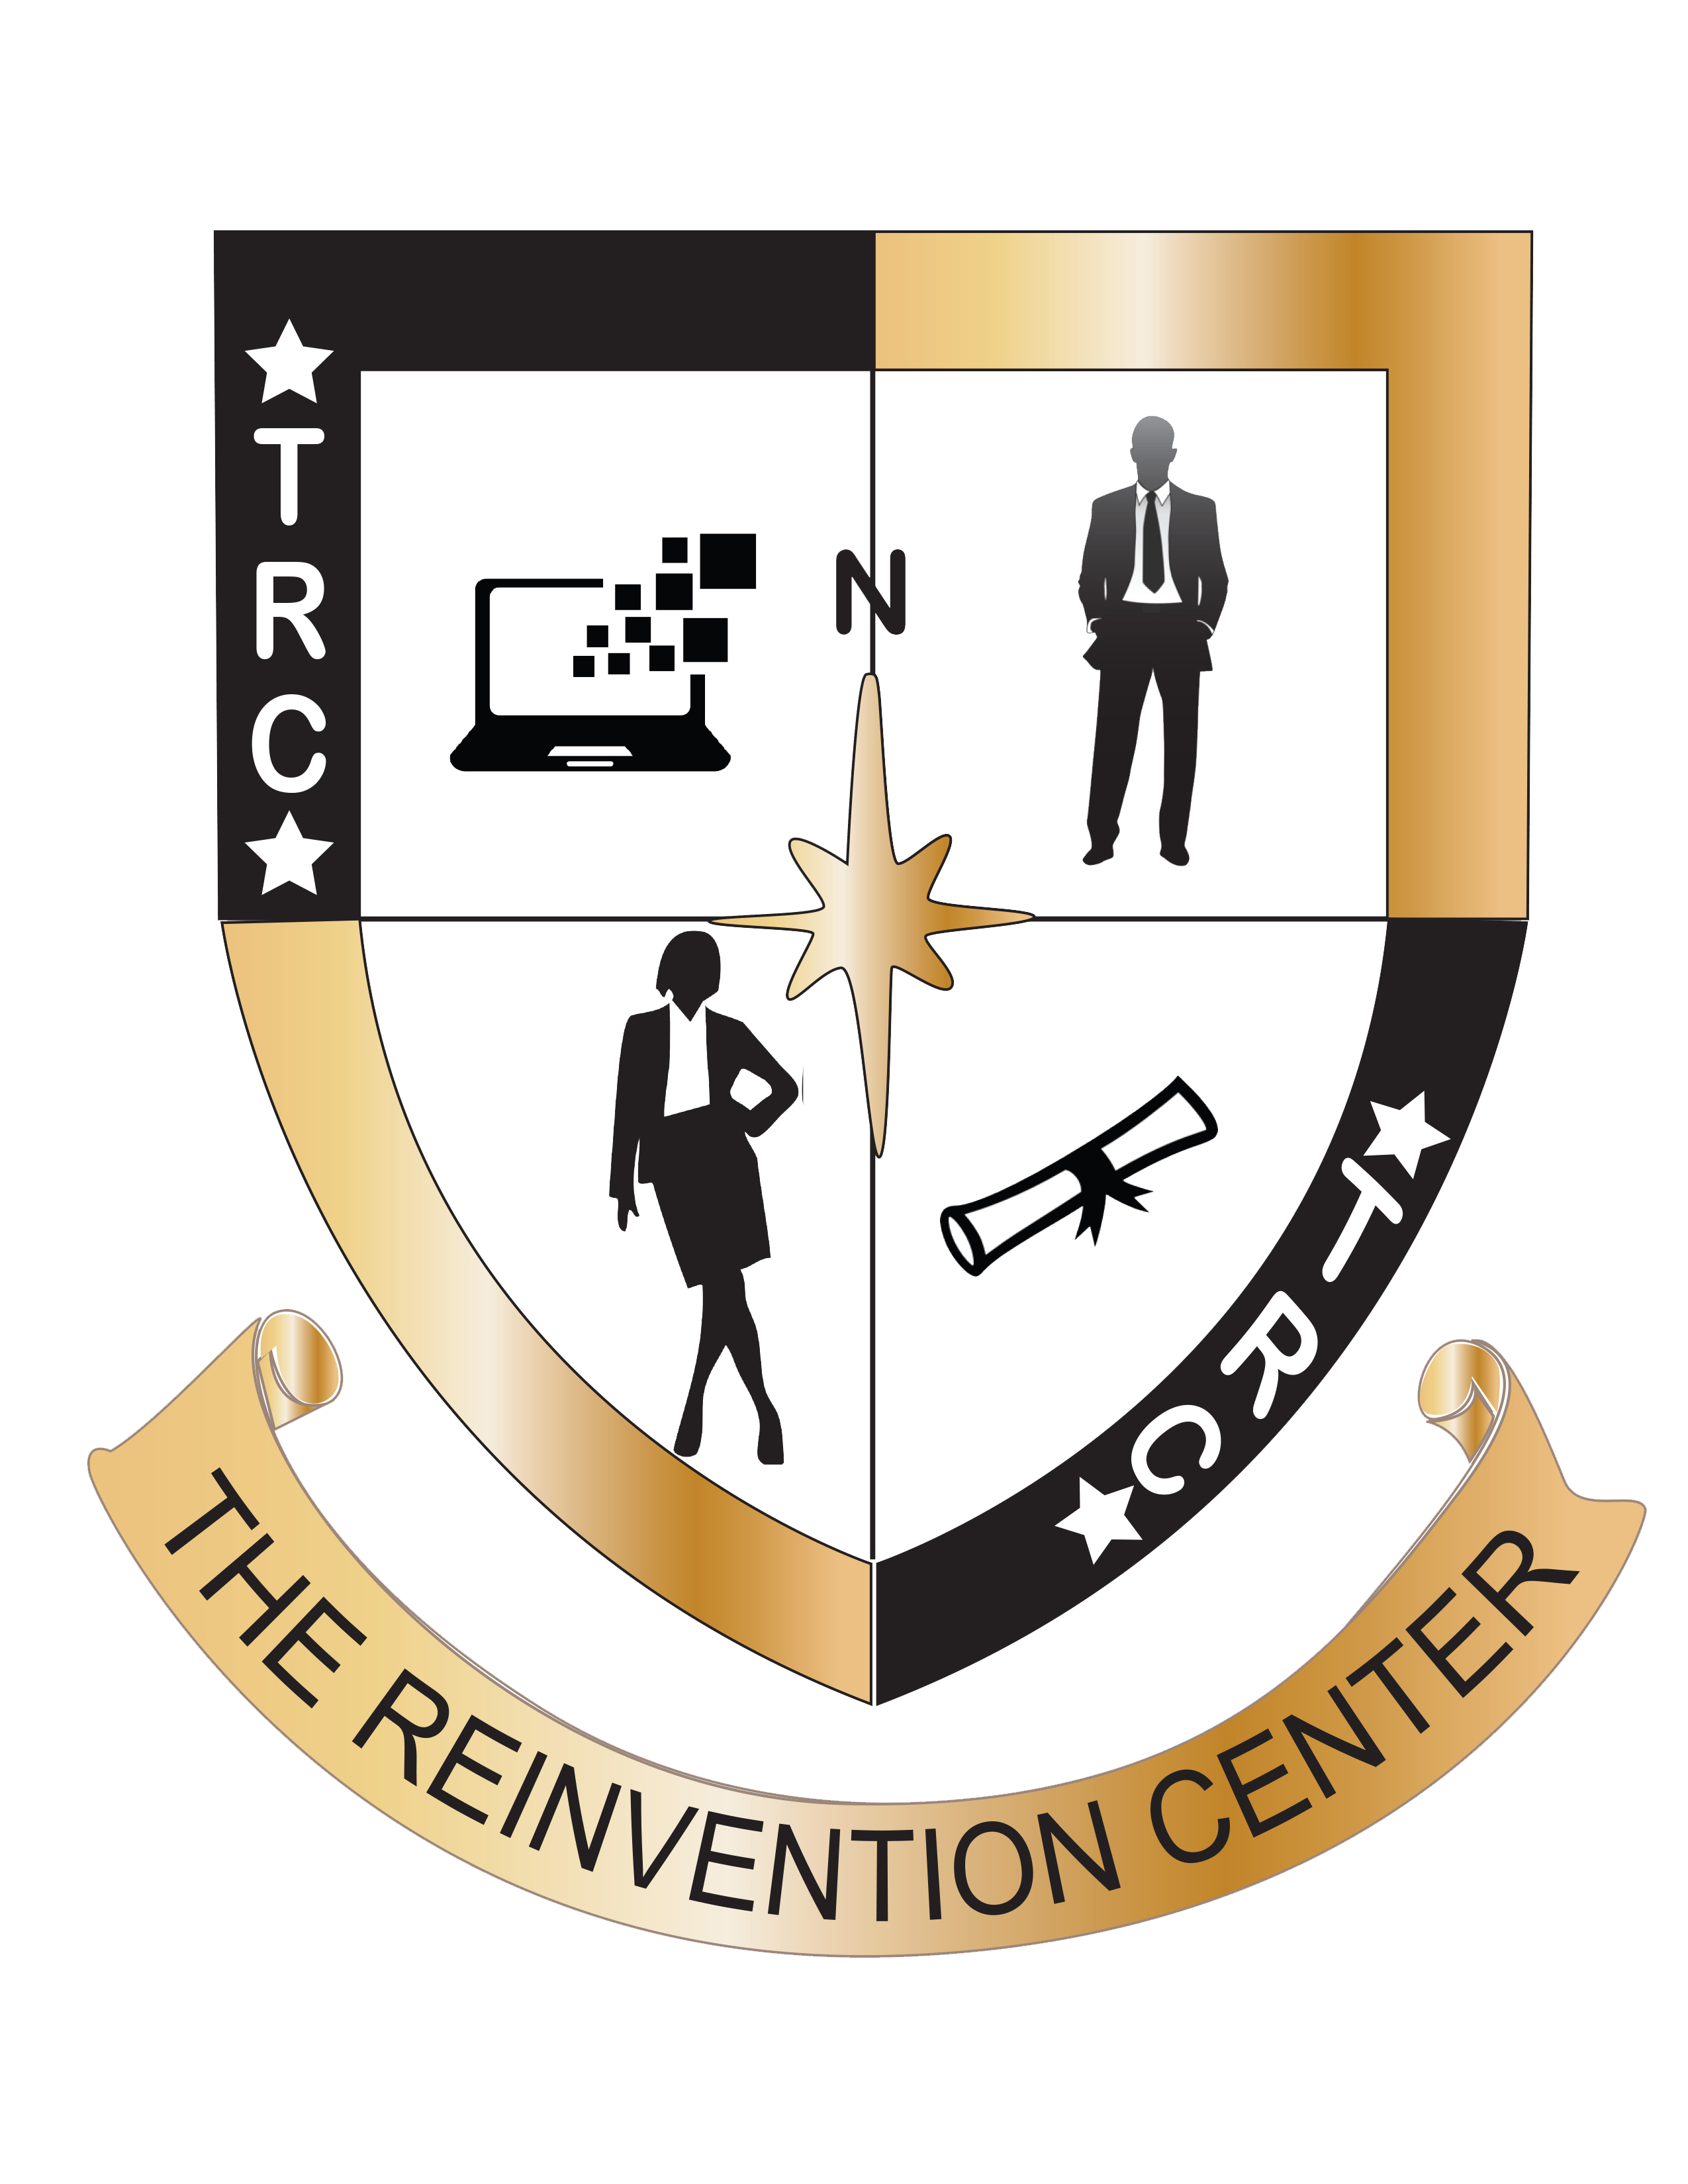 The Reinvention Center